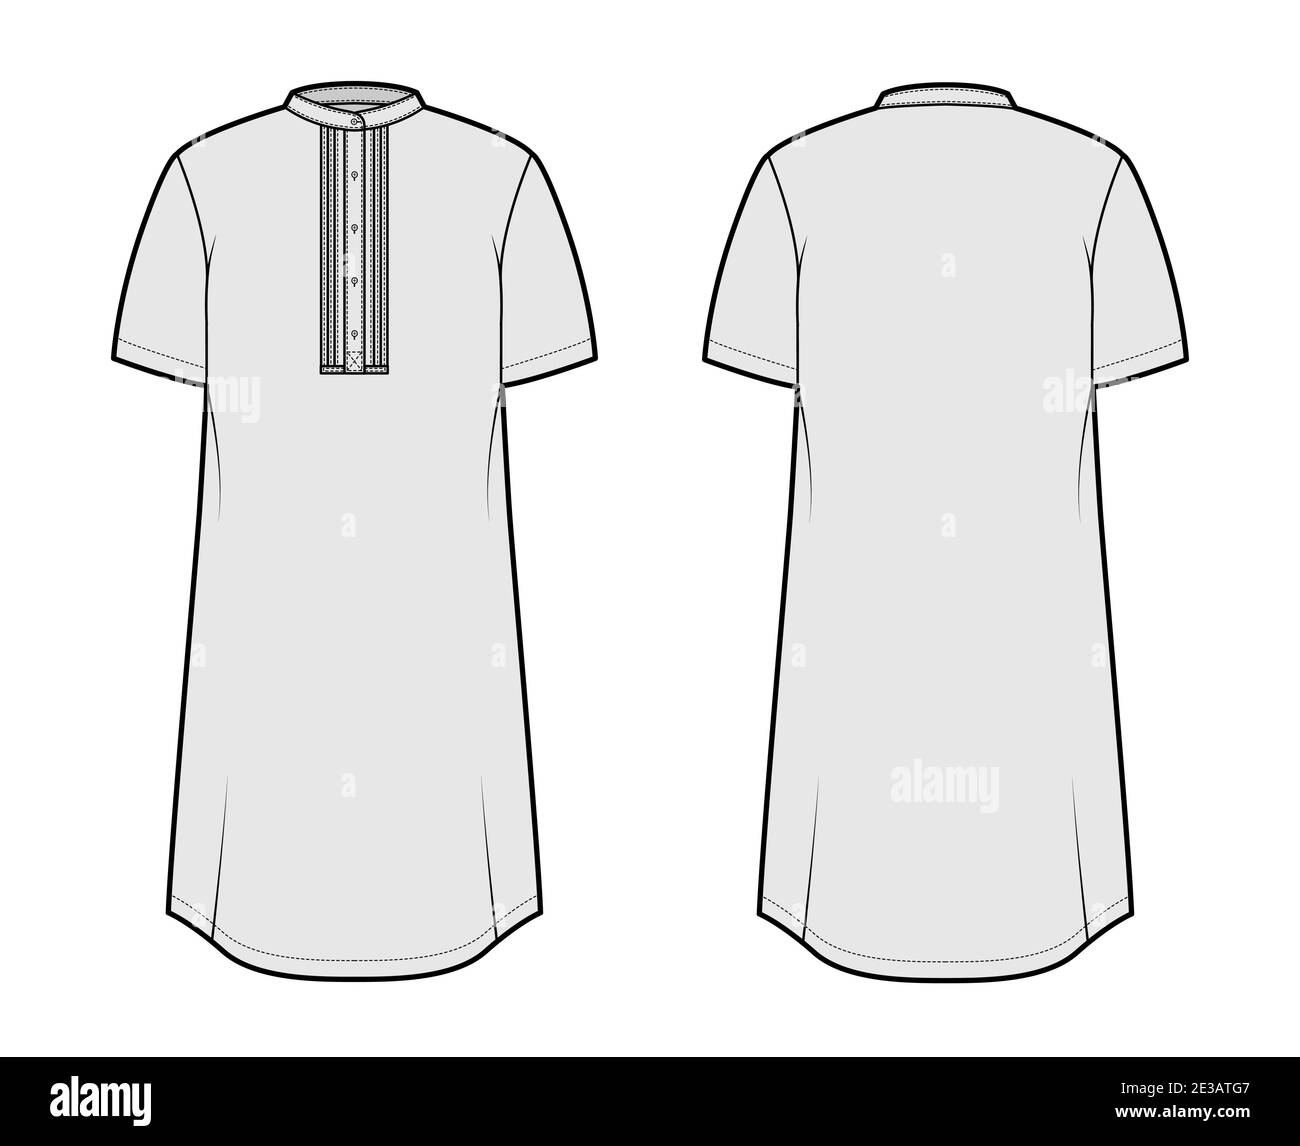 Page 6  Long Line Shirt Flat Sketch Fashion Design Images  Free Download  on Freepik